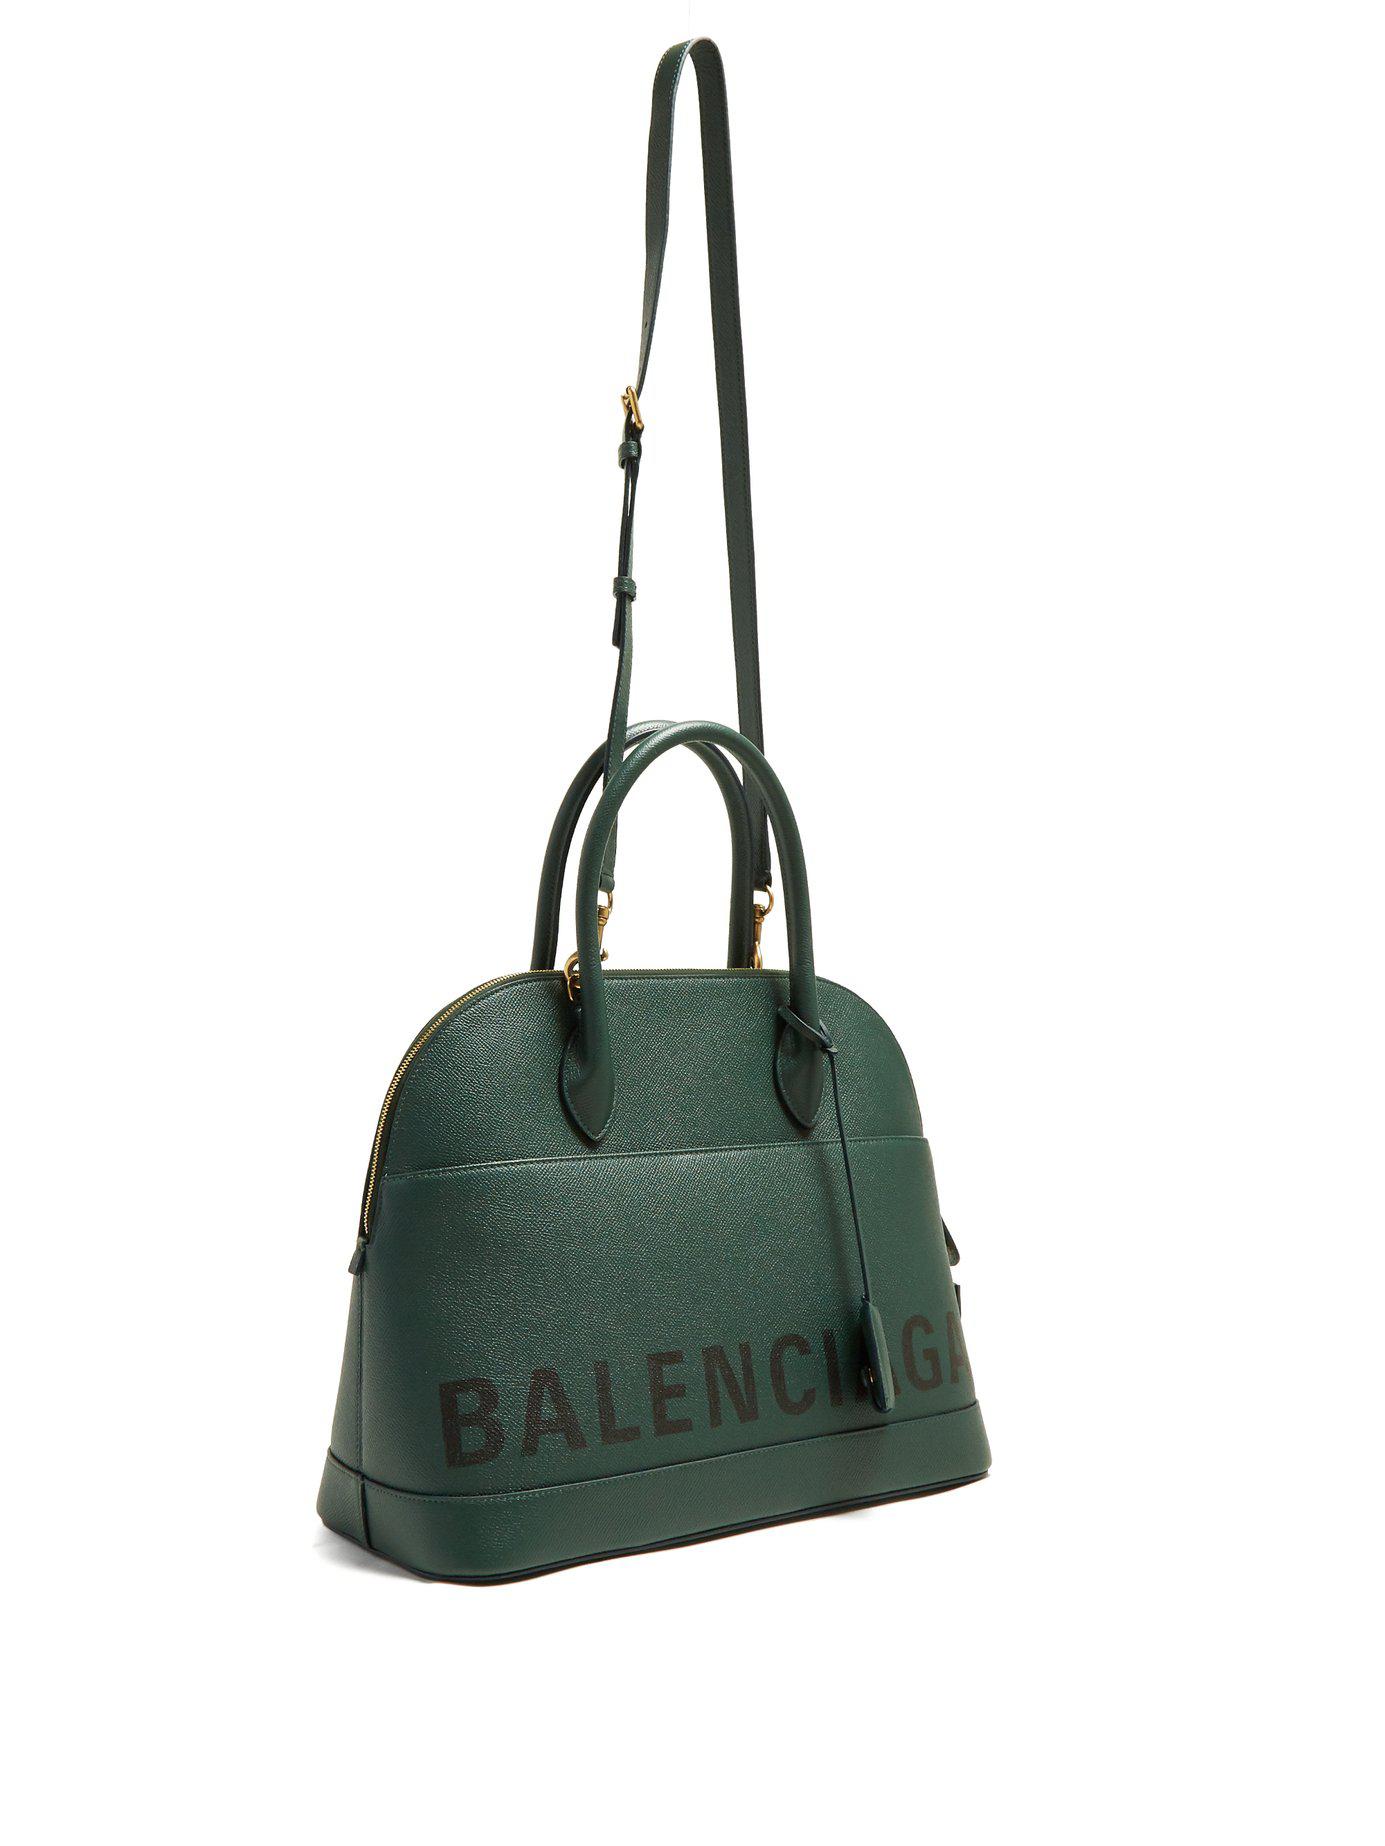 Balenciaga Ville M Leather Bag in Dark Green (Green) - Lyst